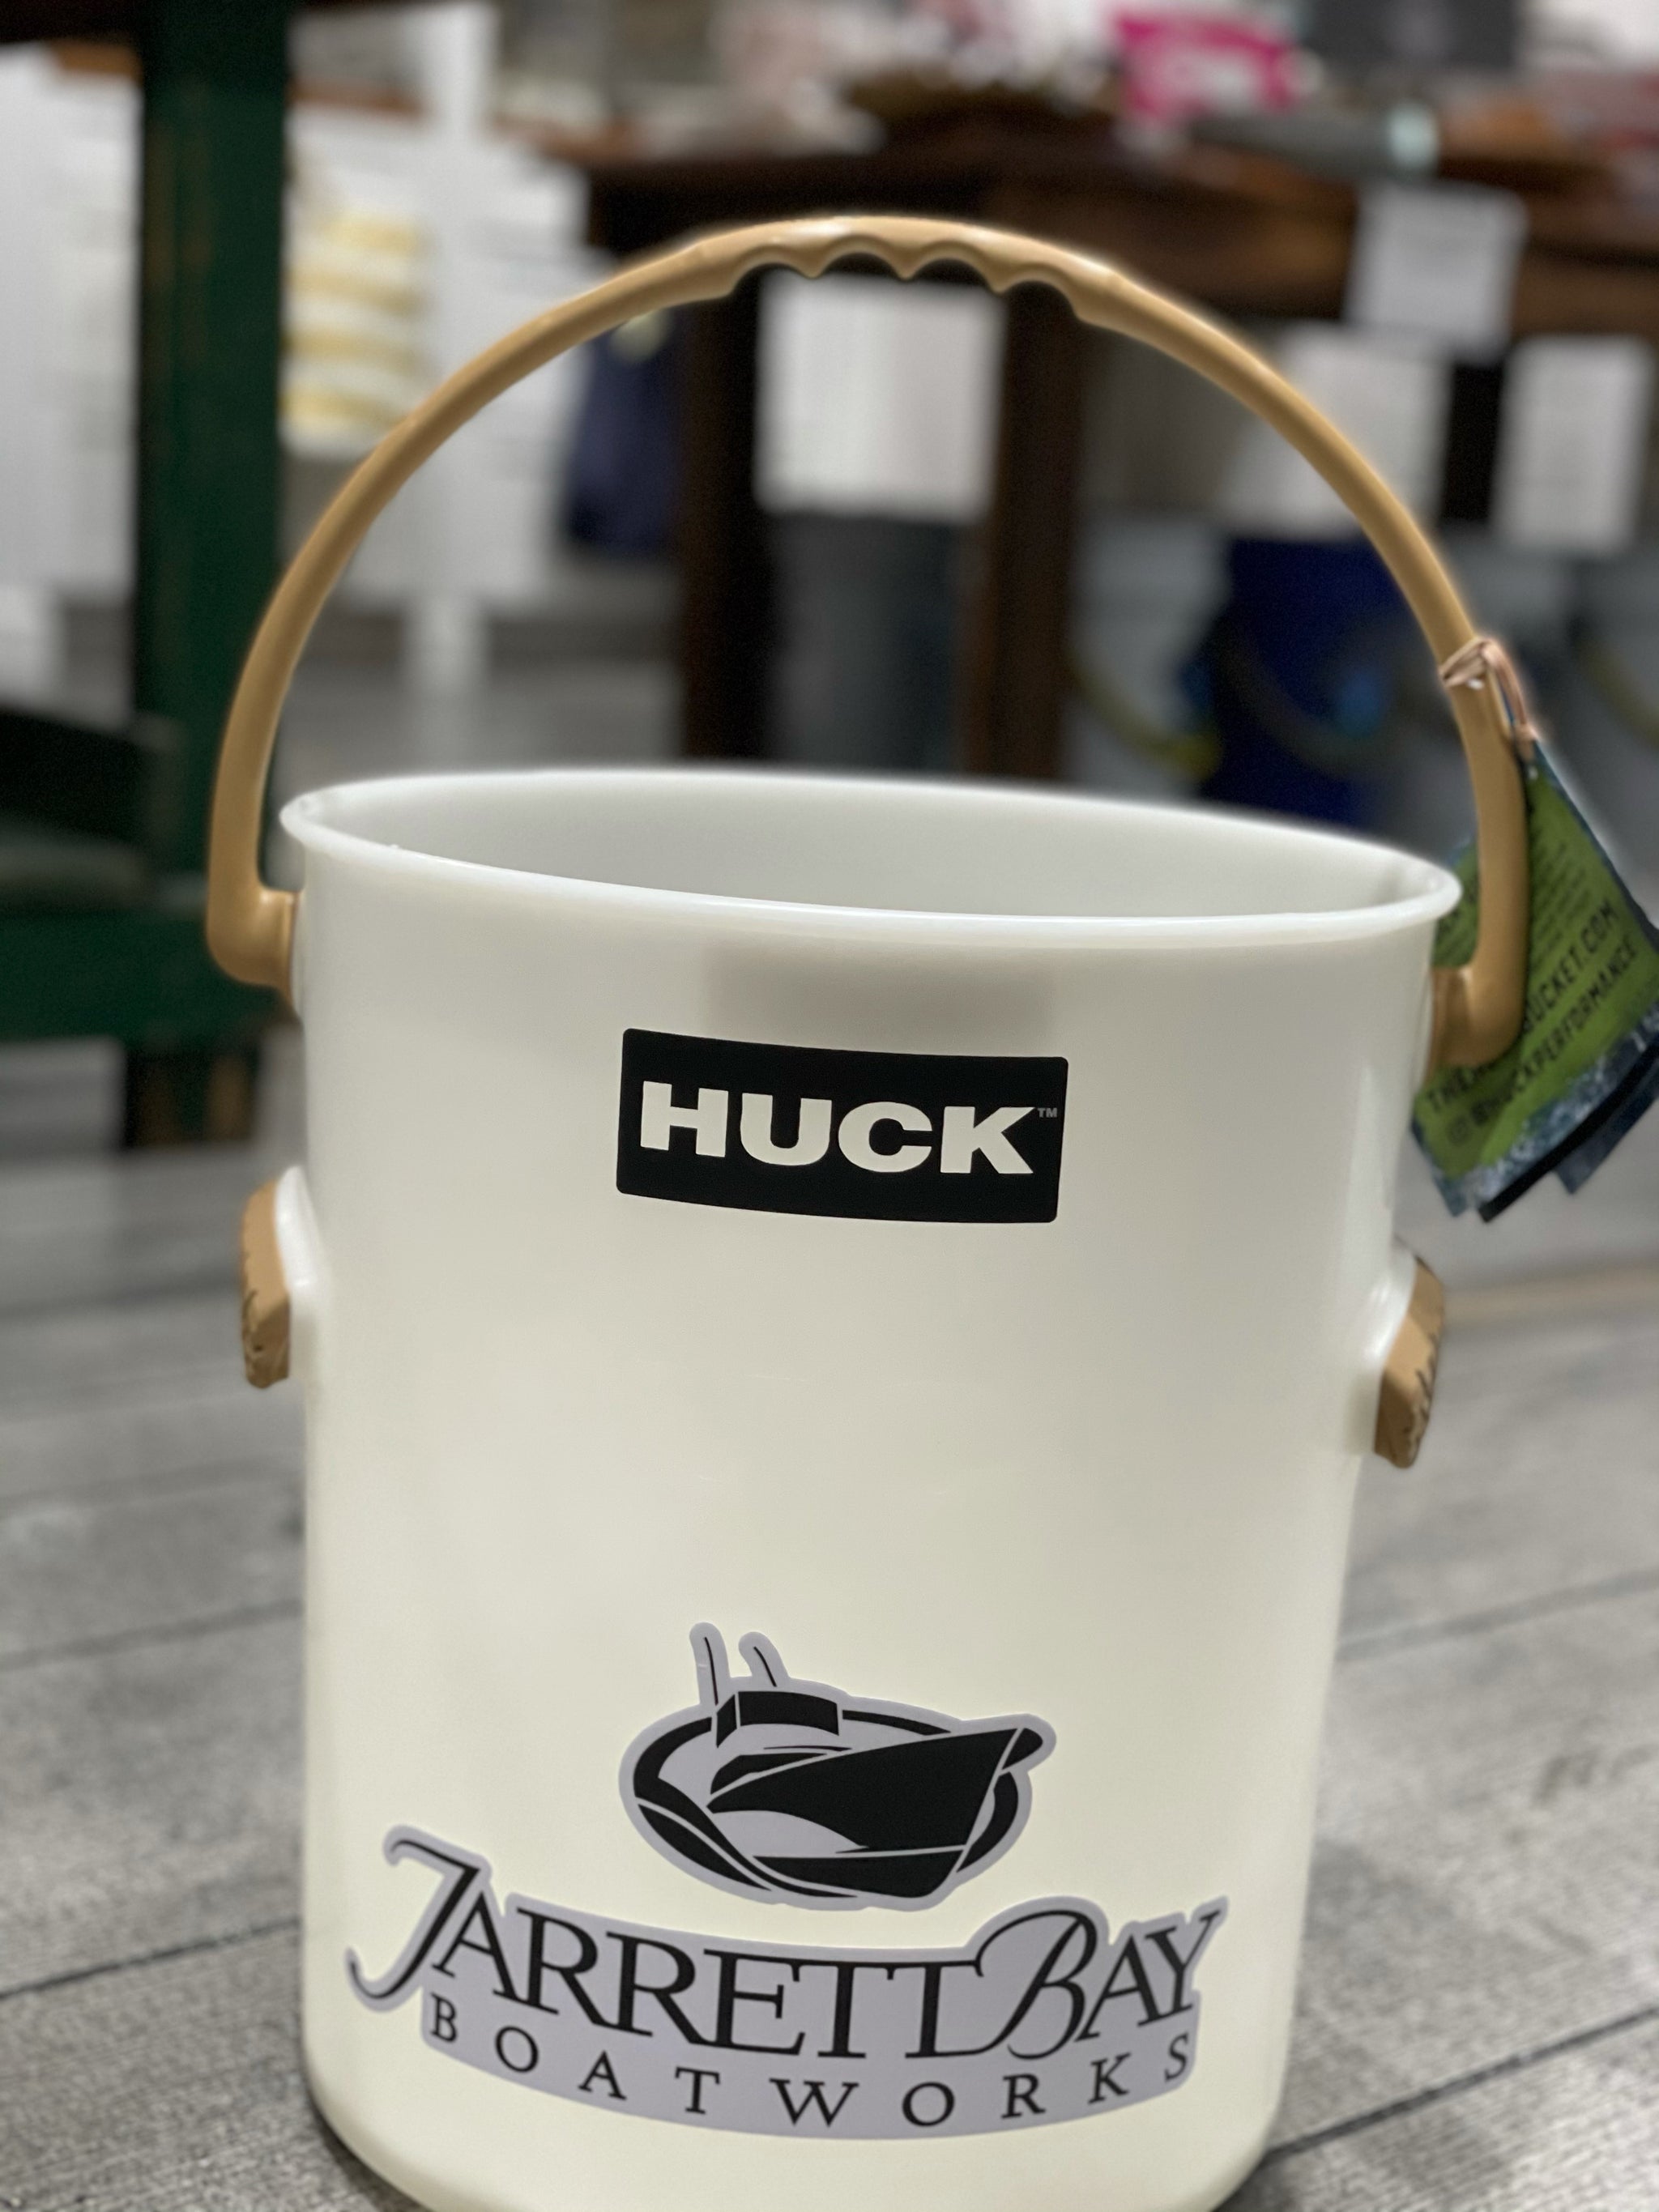 HUCK Performance Bucket - The HUCK Bucket